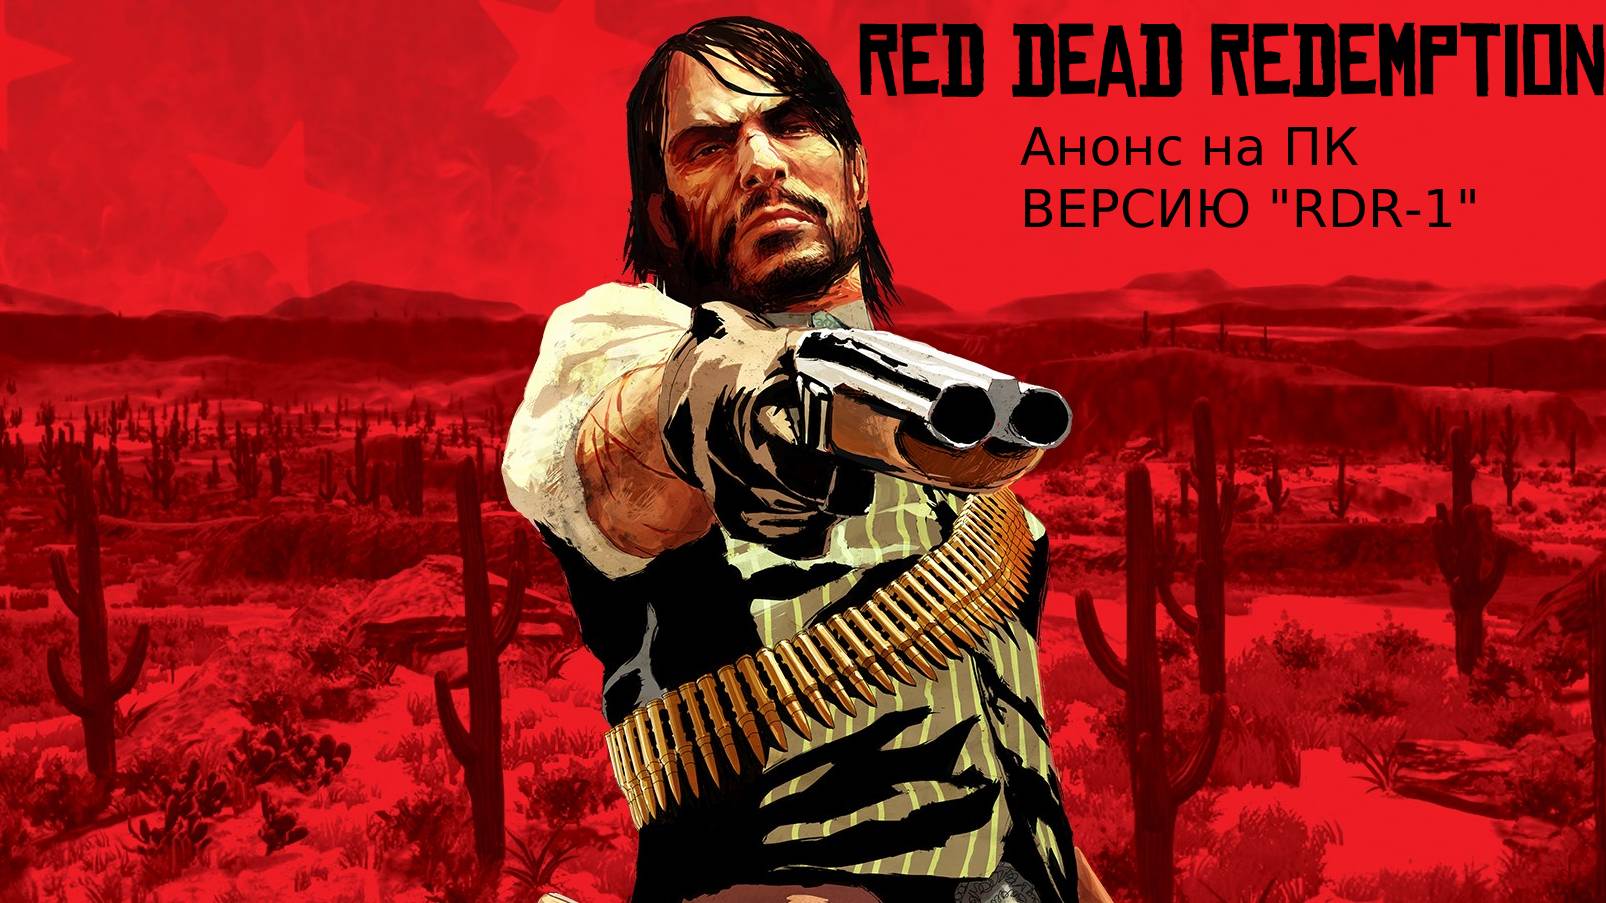 "Новости" Порт на Пк. Red Dead Redemption 1 "(RDR-1)".